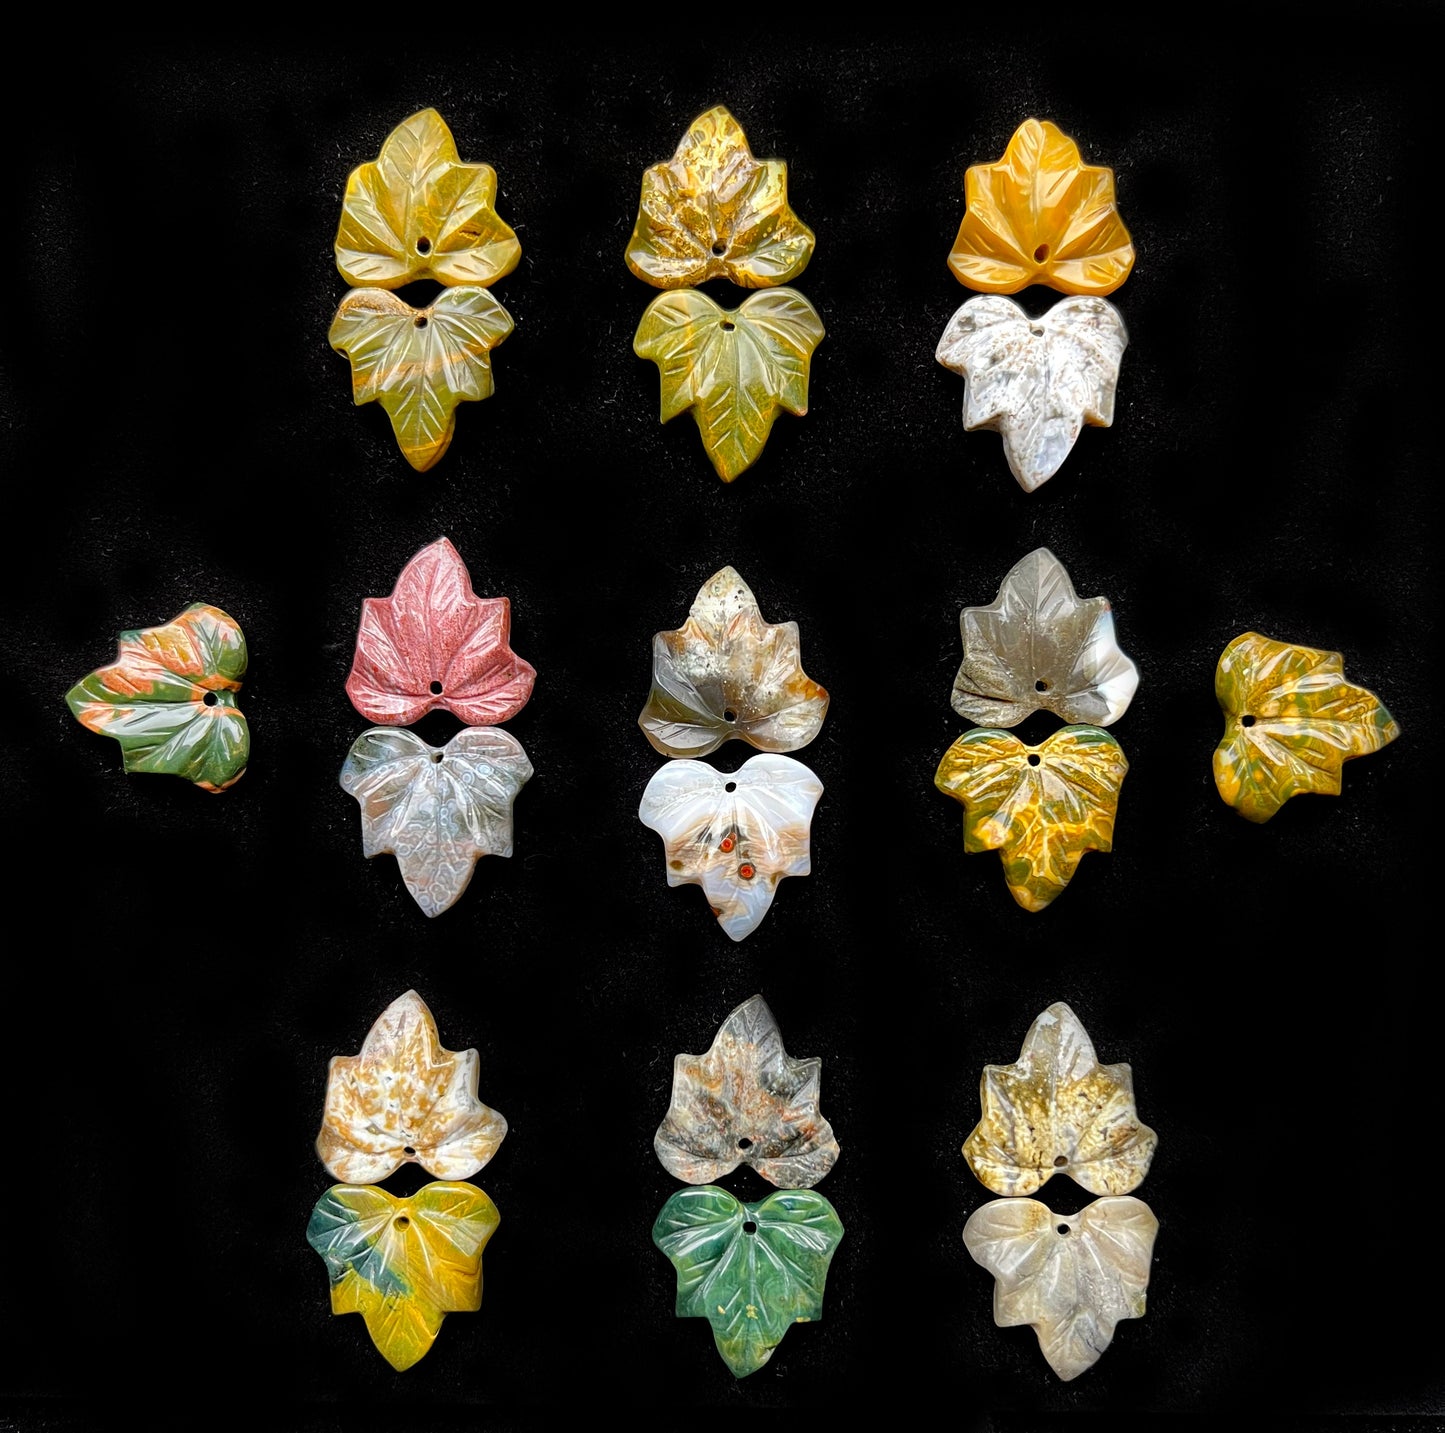 Natural Ocean Jasper Pendant Hand Carved Maple Leaf Shape 24mm Gorgeous Colorful Beads Handmade Earring Loose Bead Loose Jasper Loose Stone